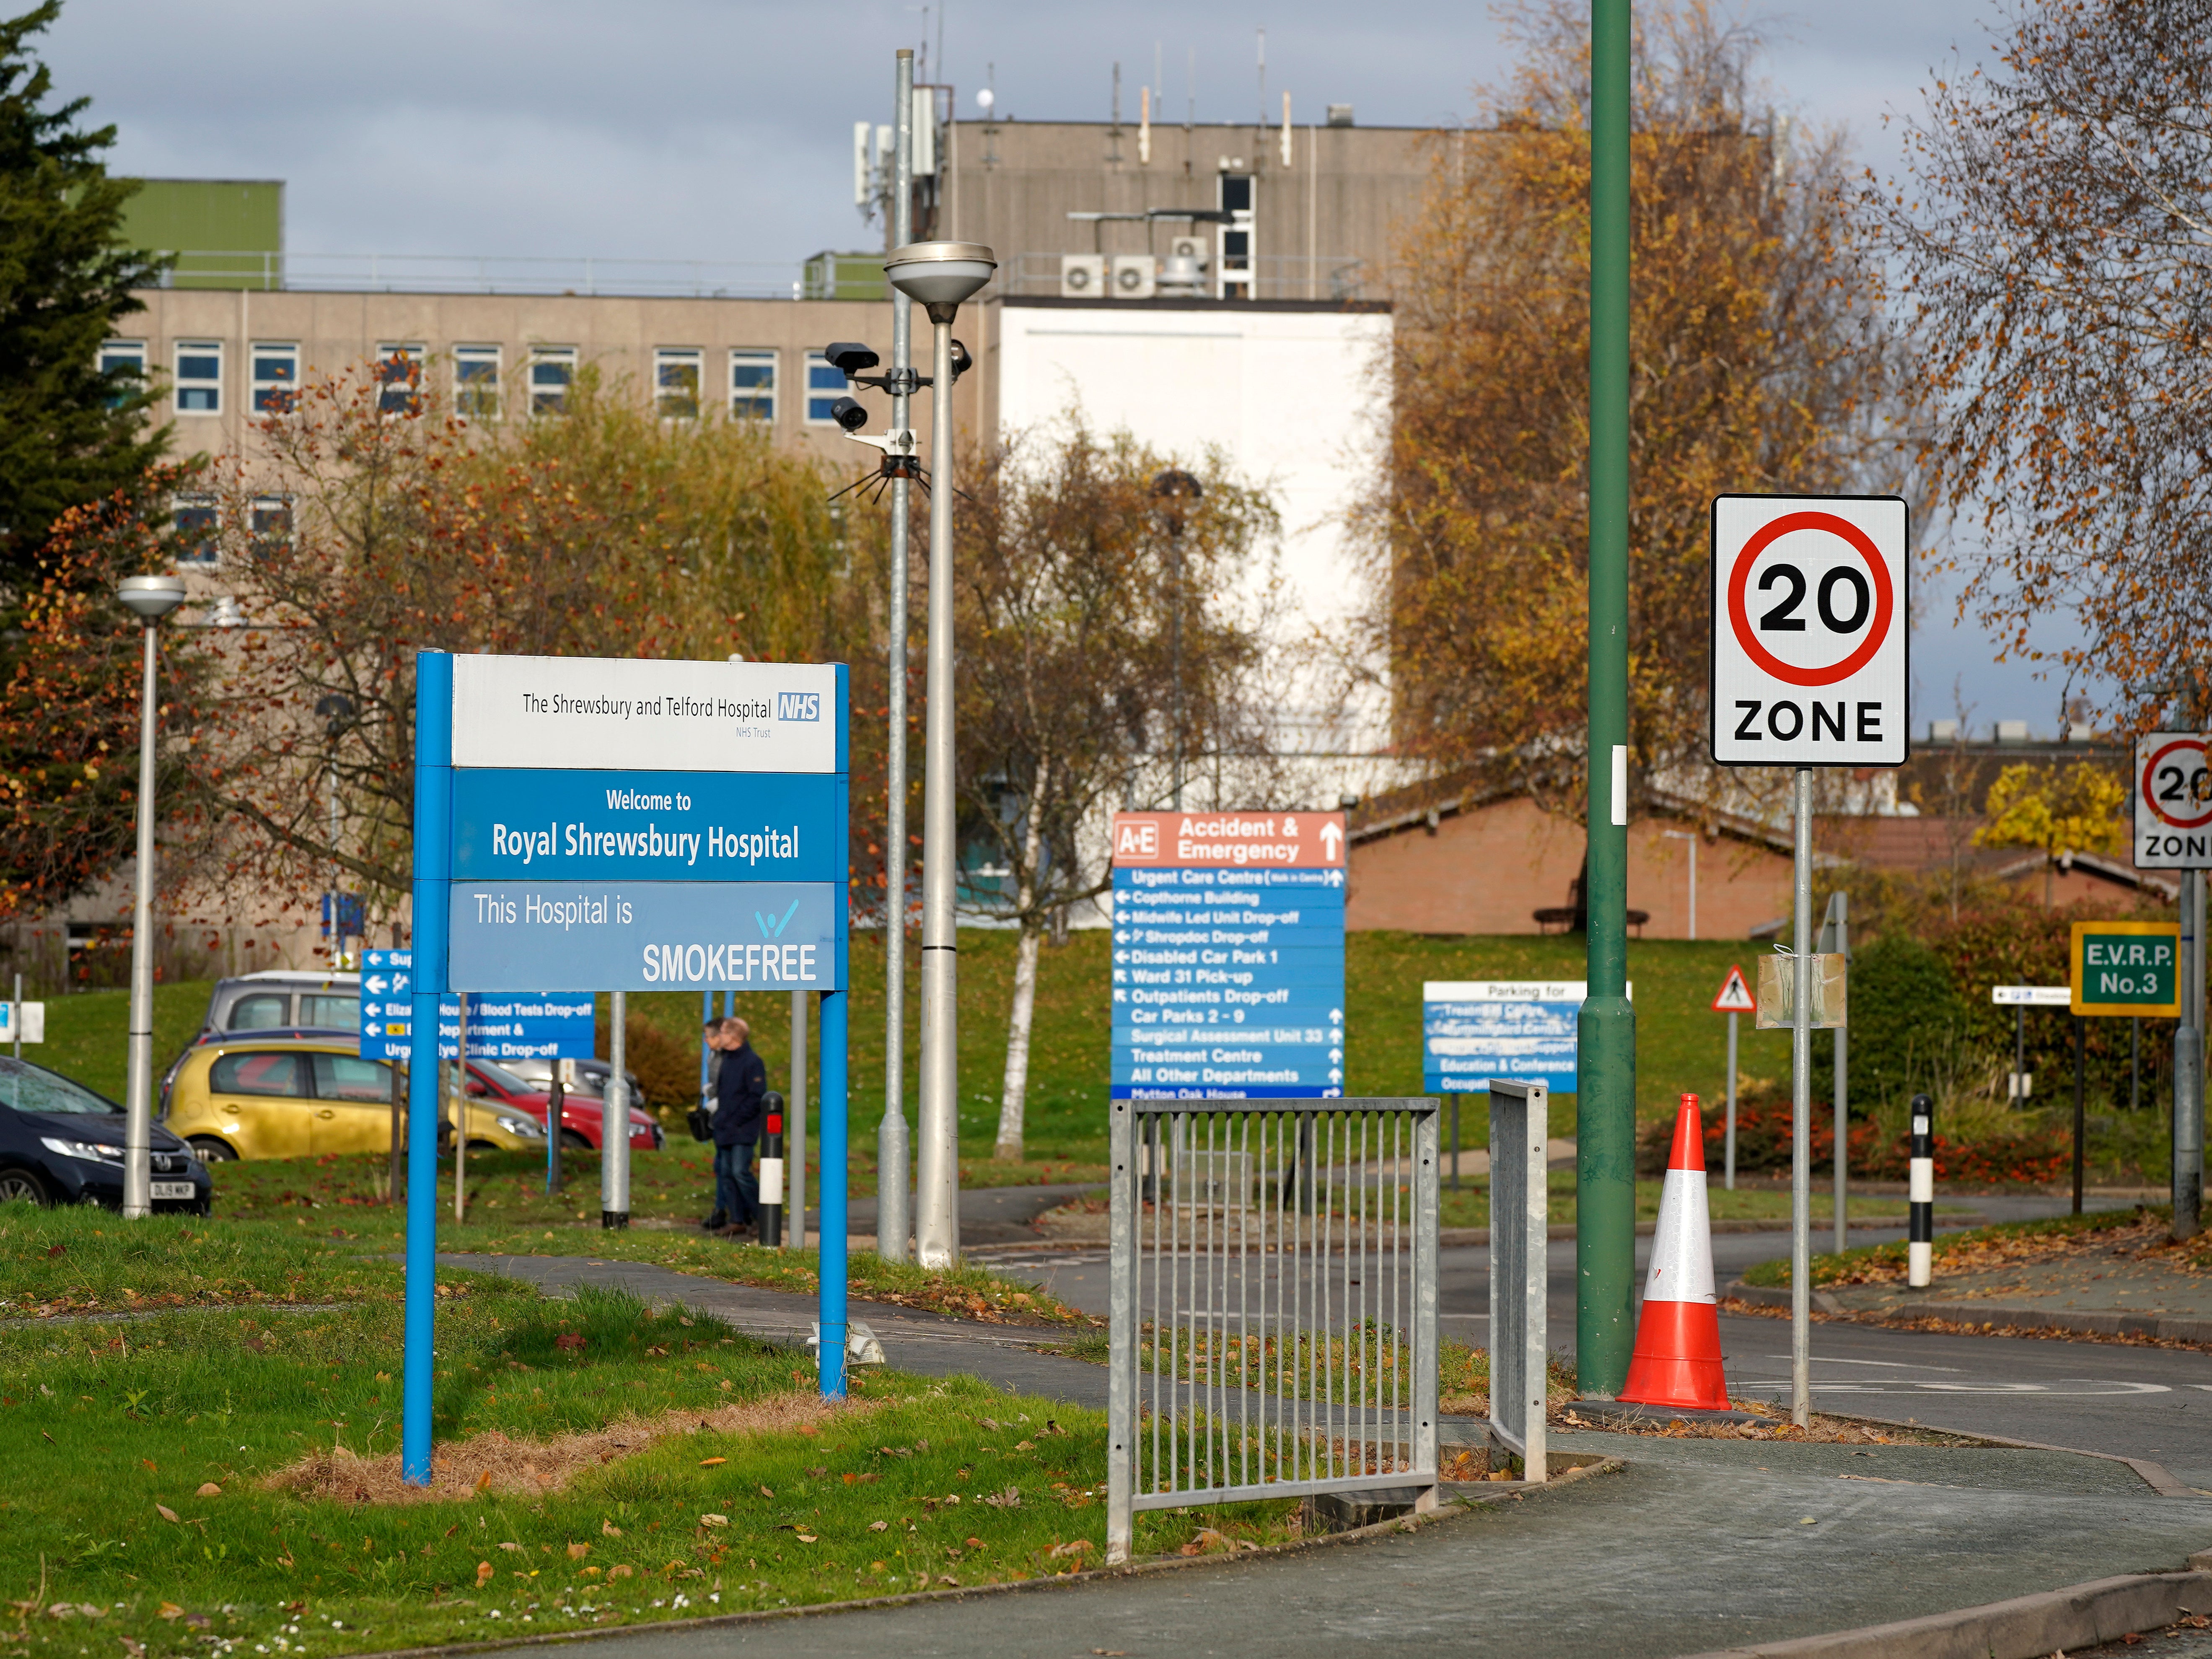 The Royal Shrewsbury Hospital is run by Shrewsbury and Telford NHS Trust